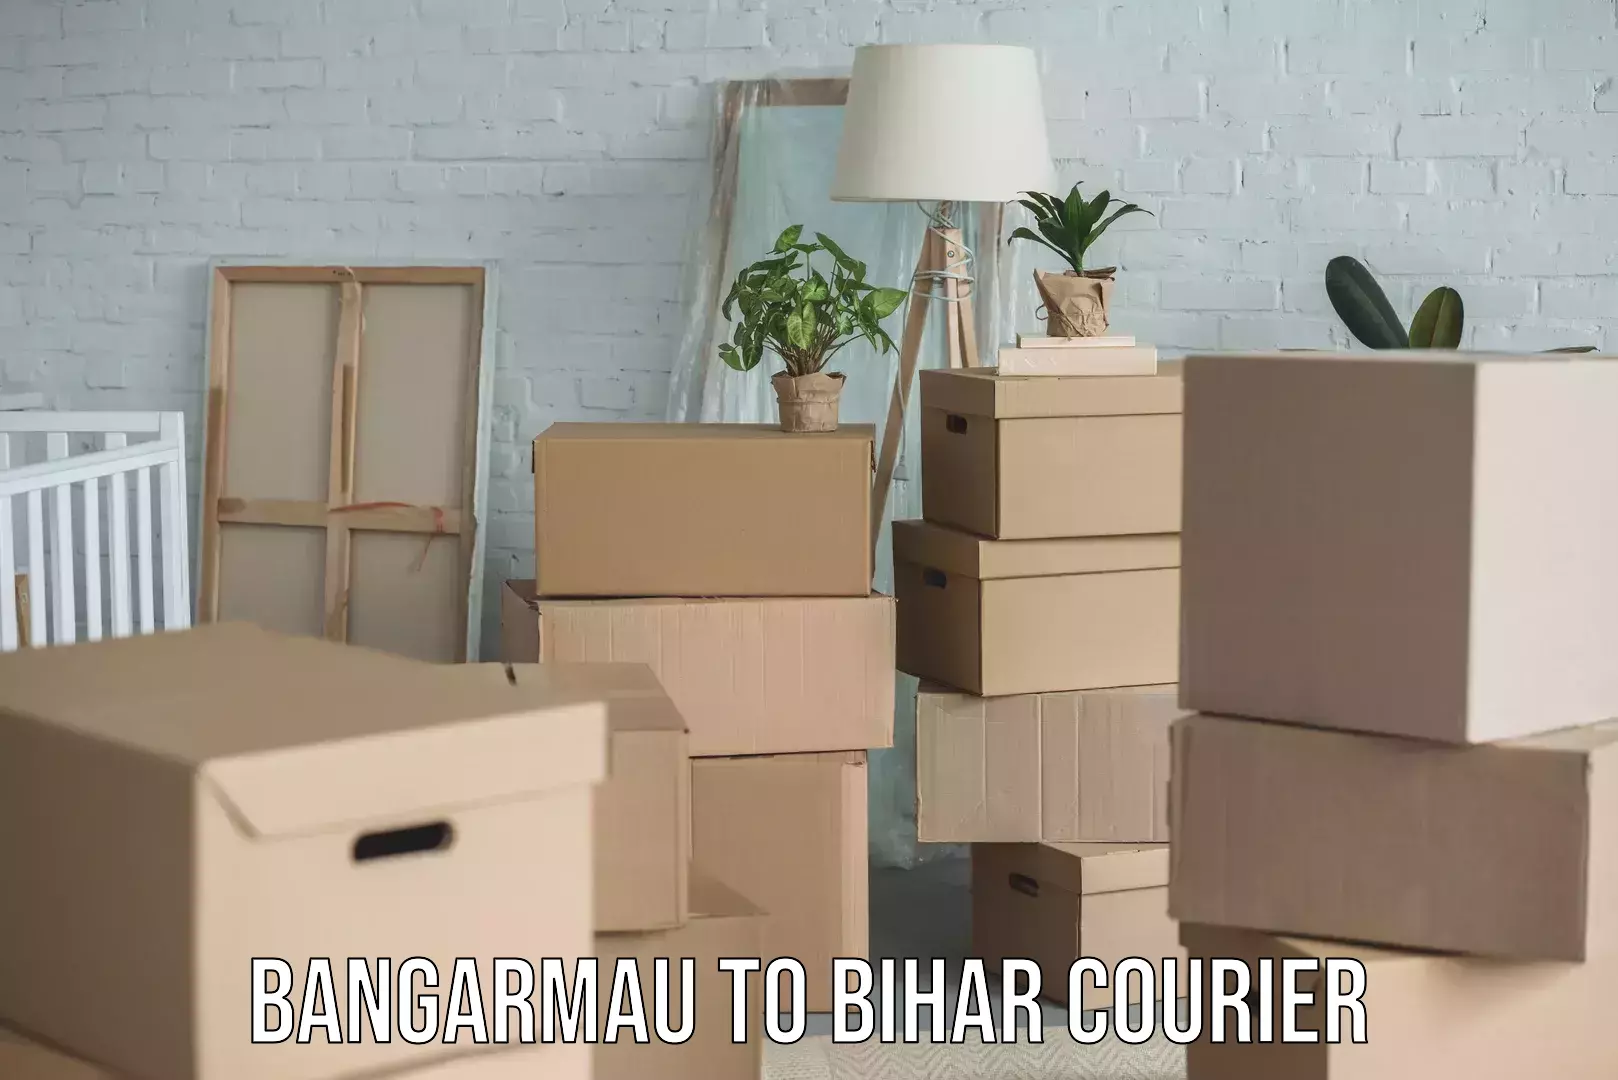 Supply chain efficiency Bangarmau to Bihar